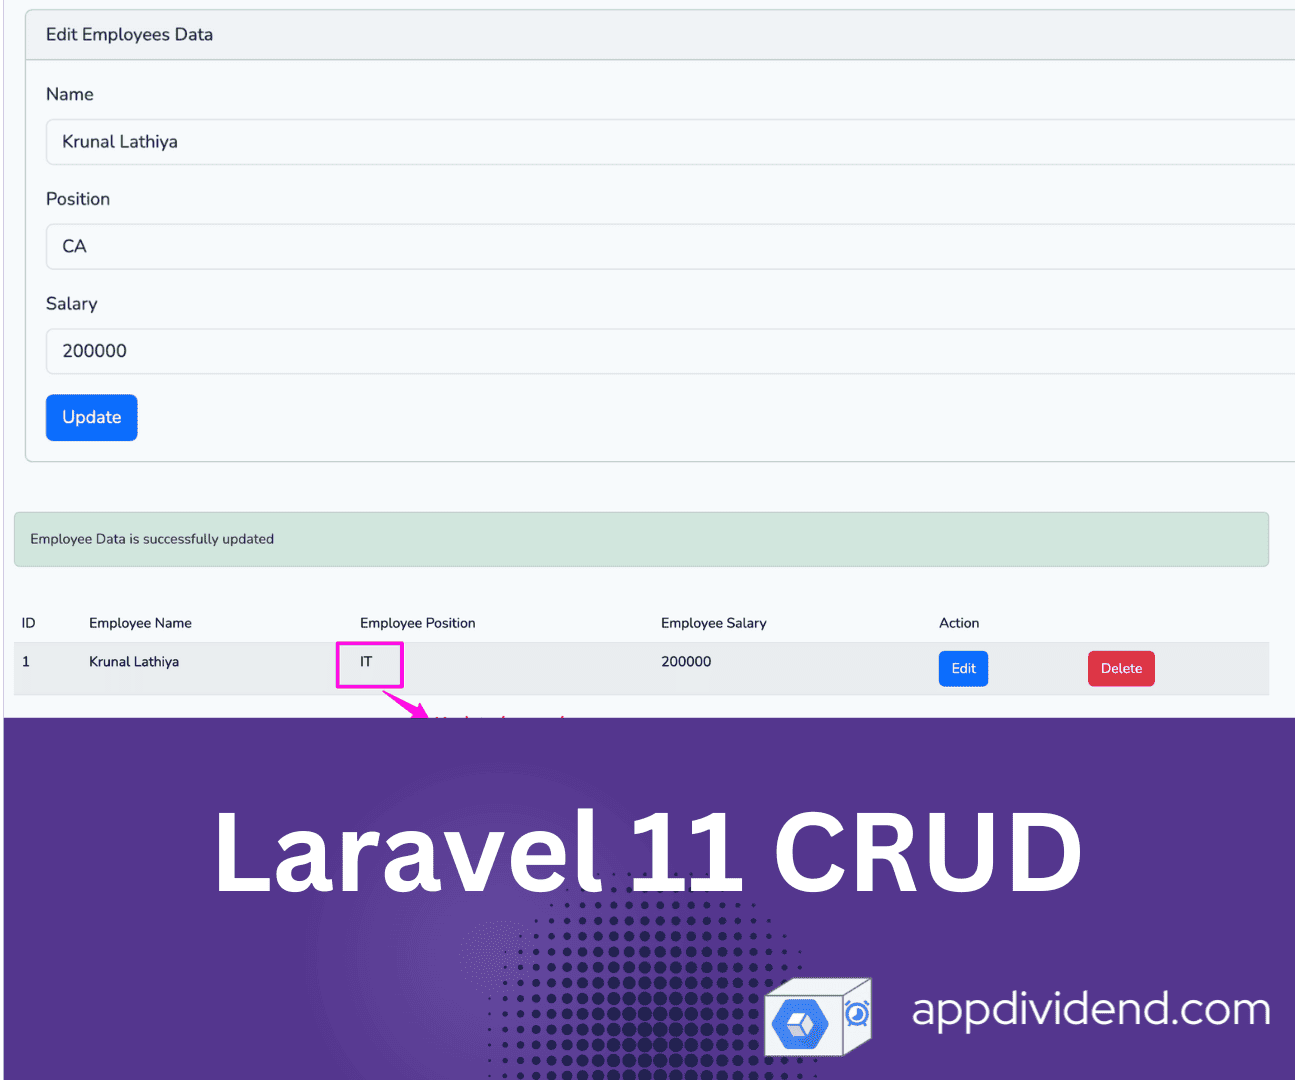 Laravel 11 CRUD Application